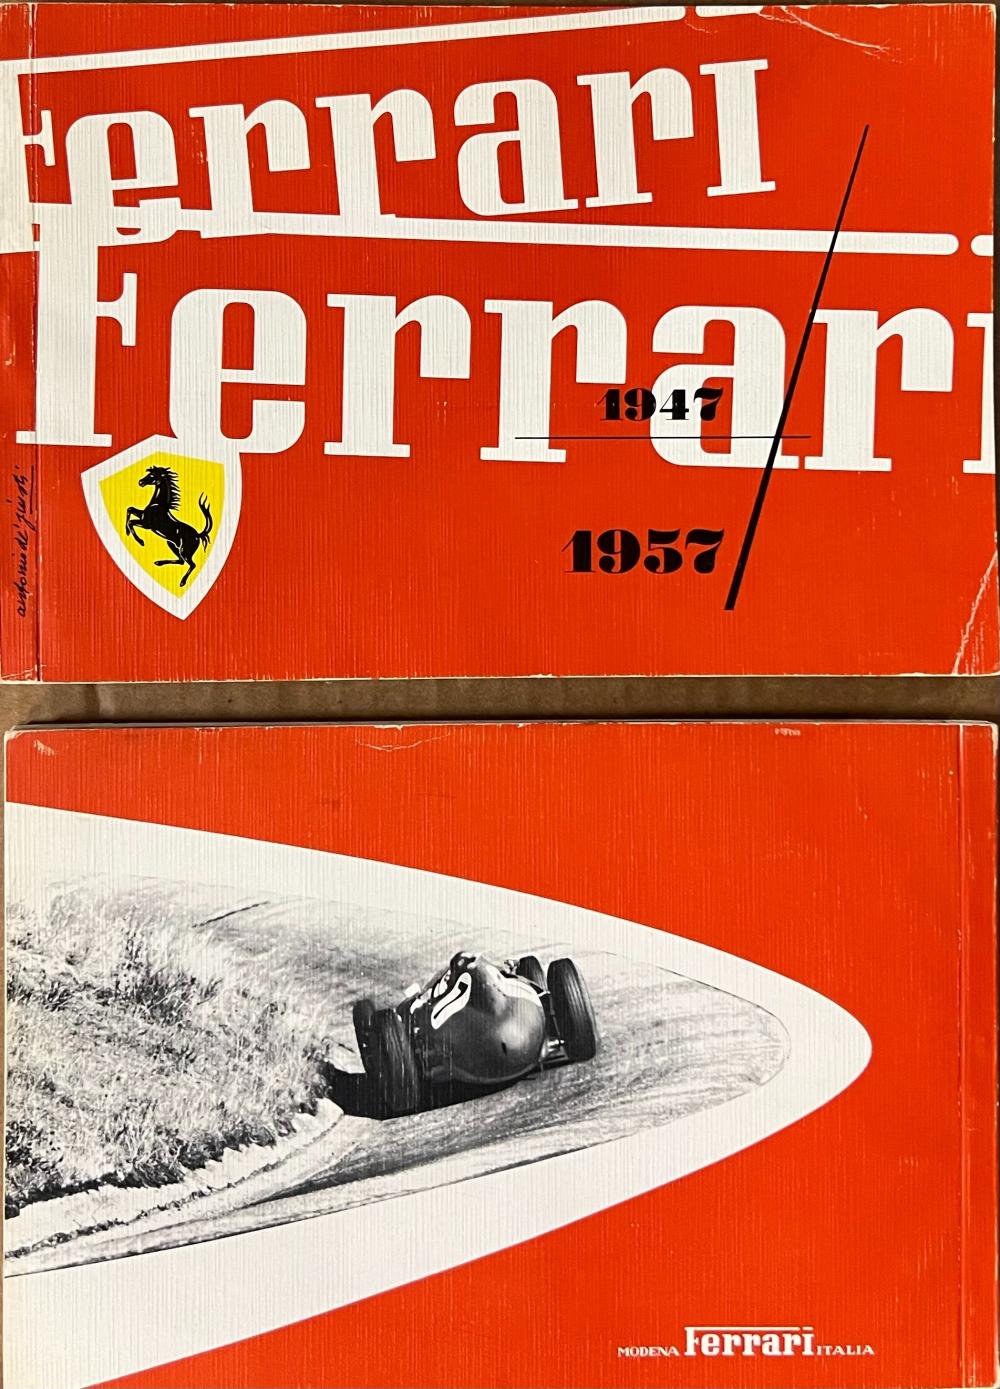 1947-1957 FERRARI YEARBOOK, COVERS